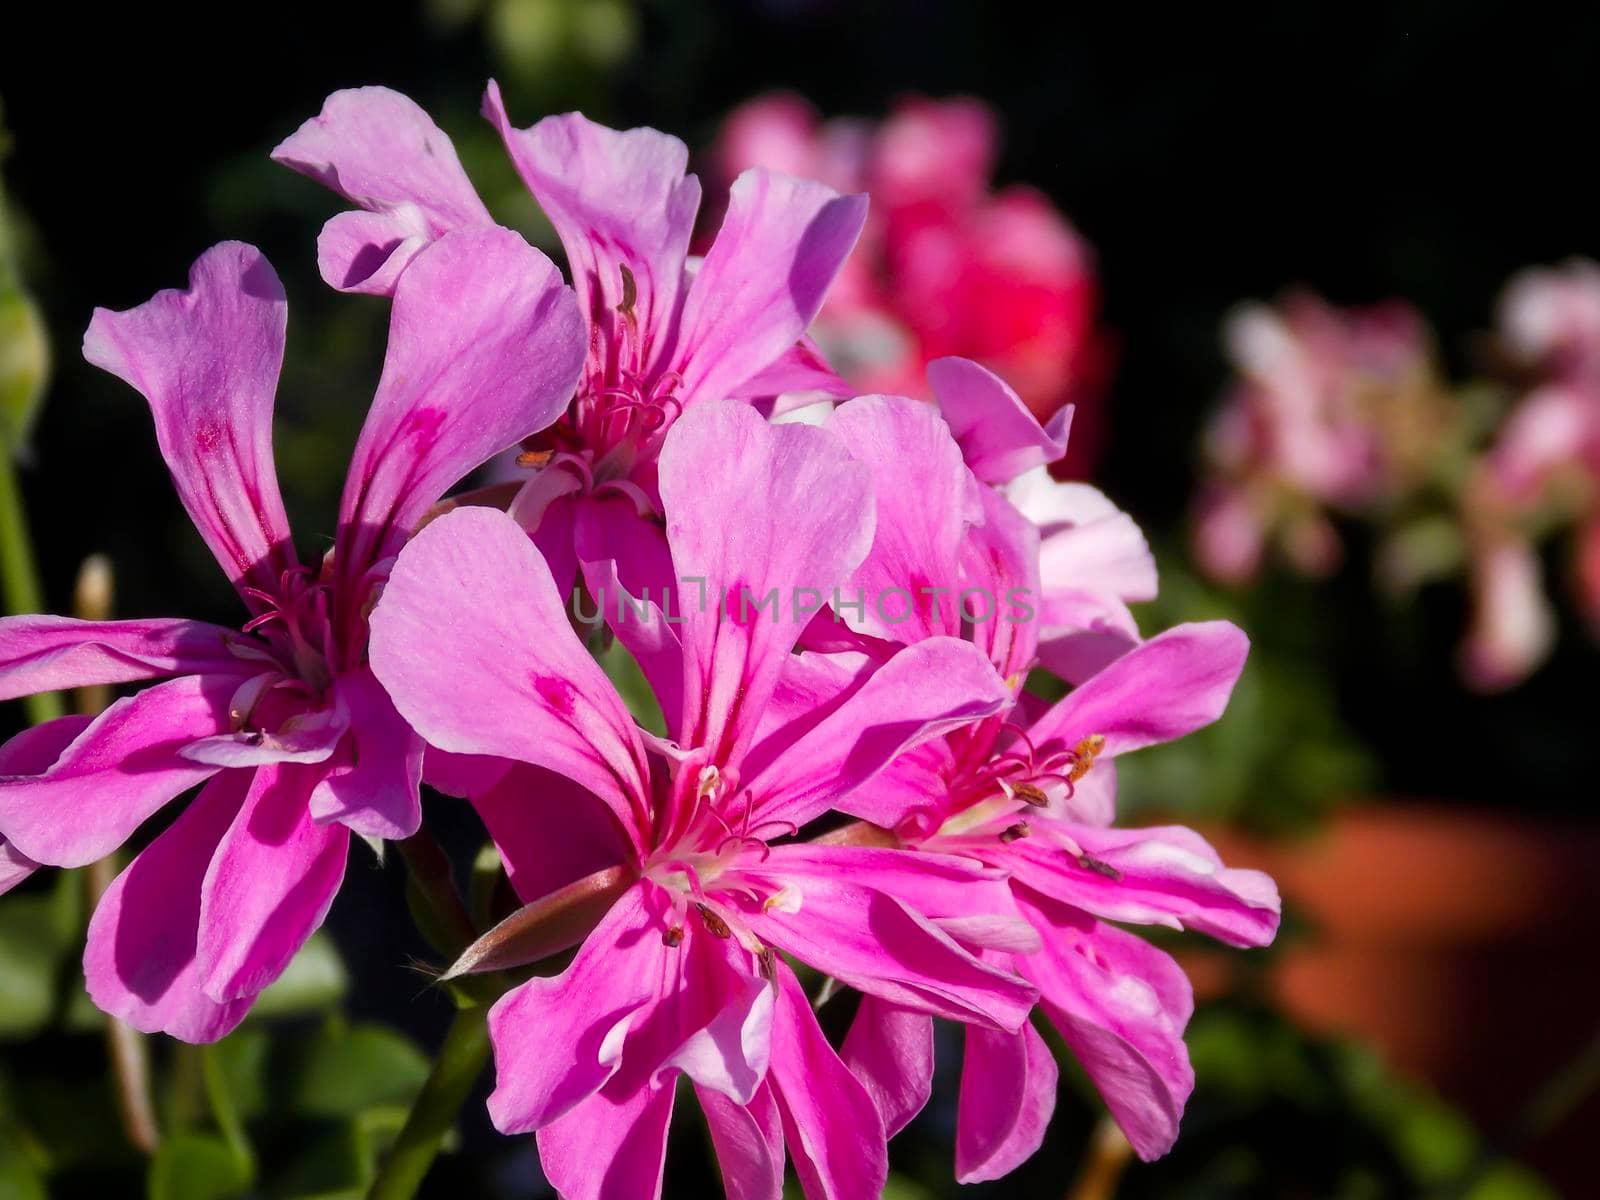 Pink Ivyleaf Geranium Close Up